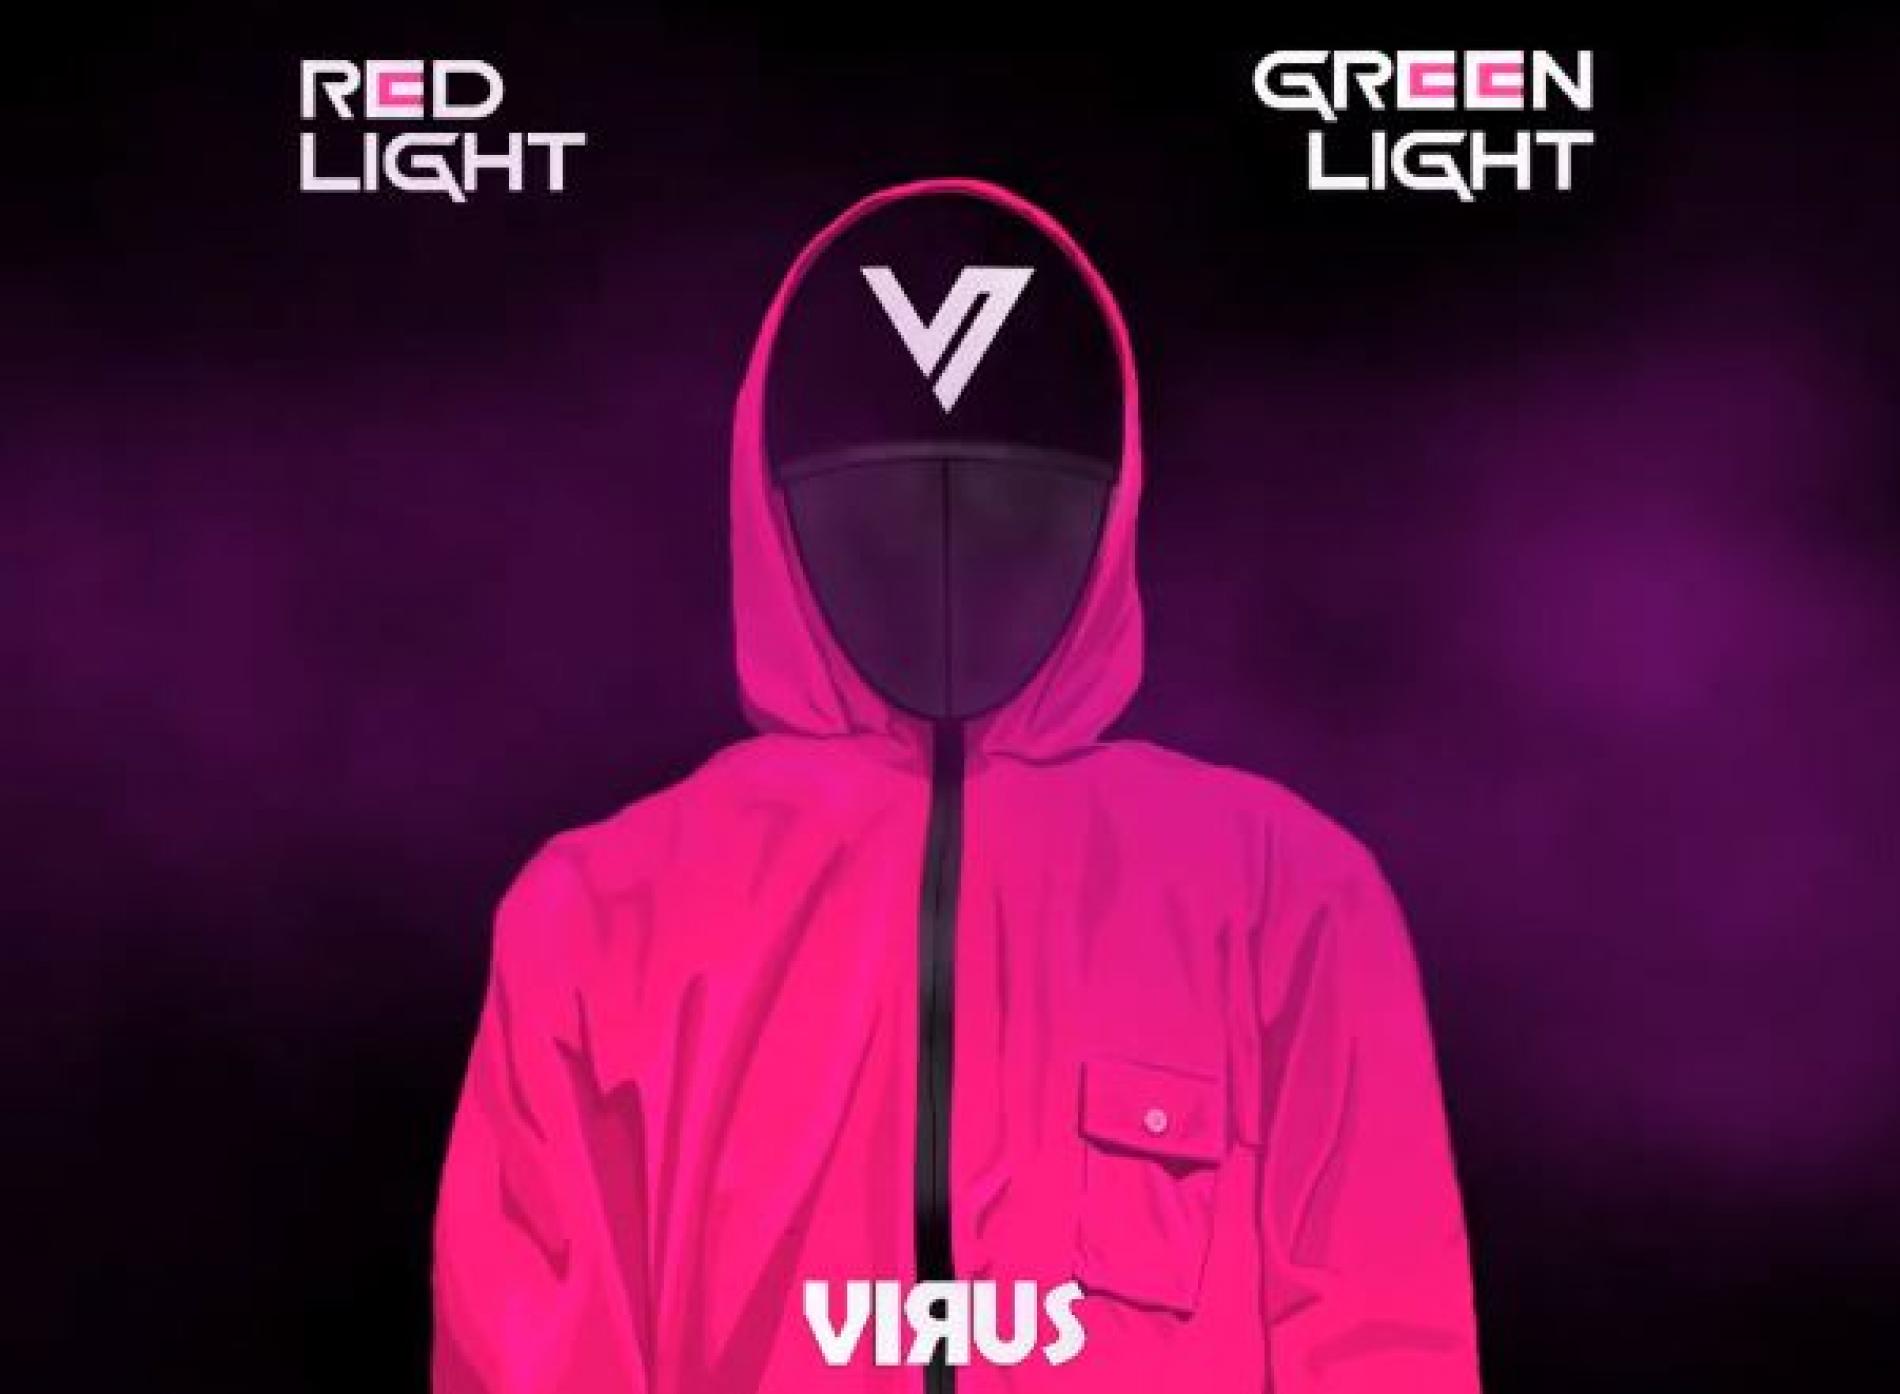 New Music : DJ Virus – Red Light Green Light